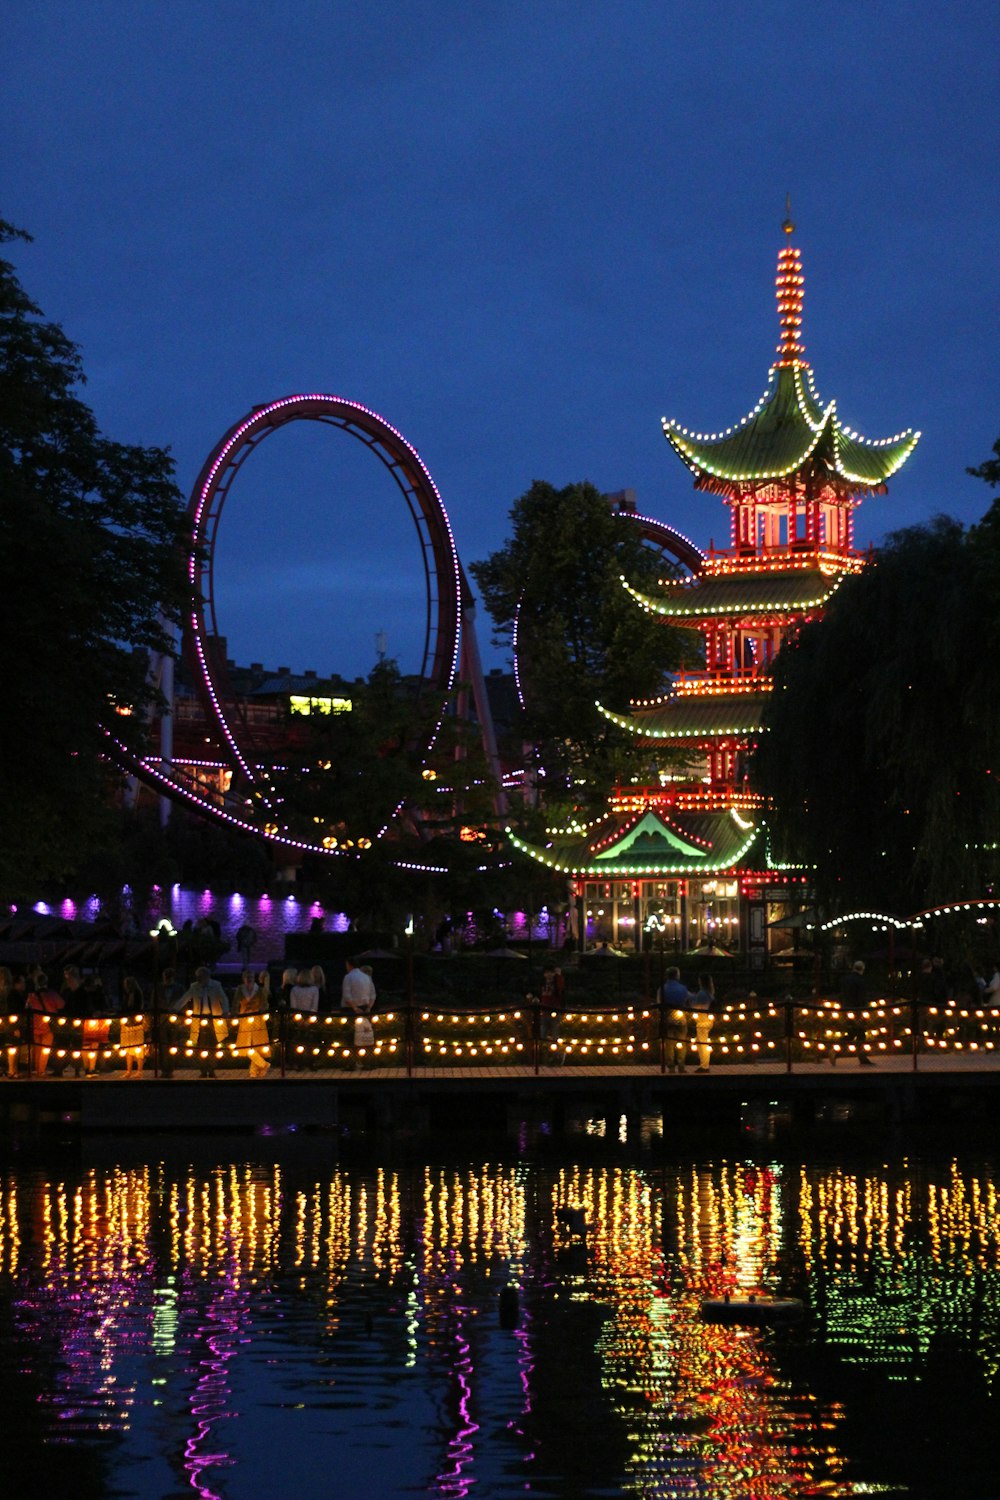 Tivoli Gardens with lights on it